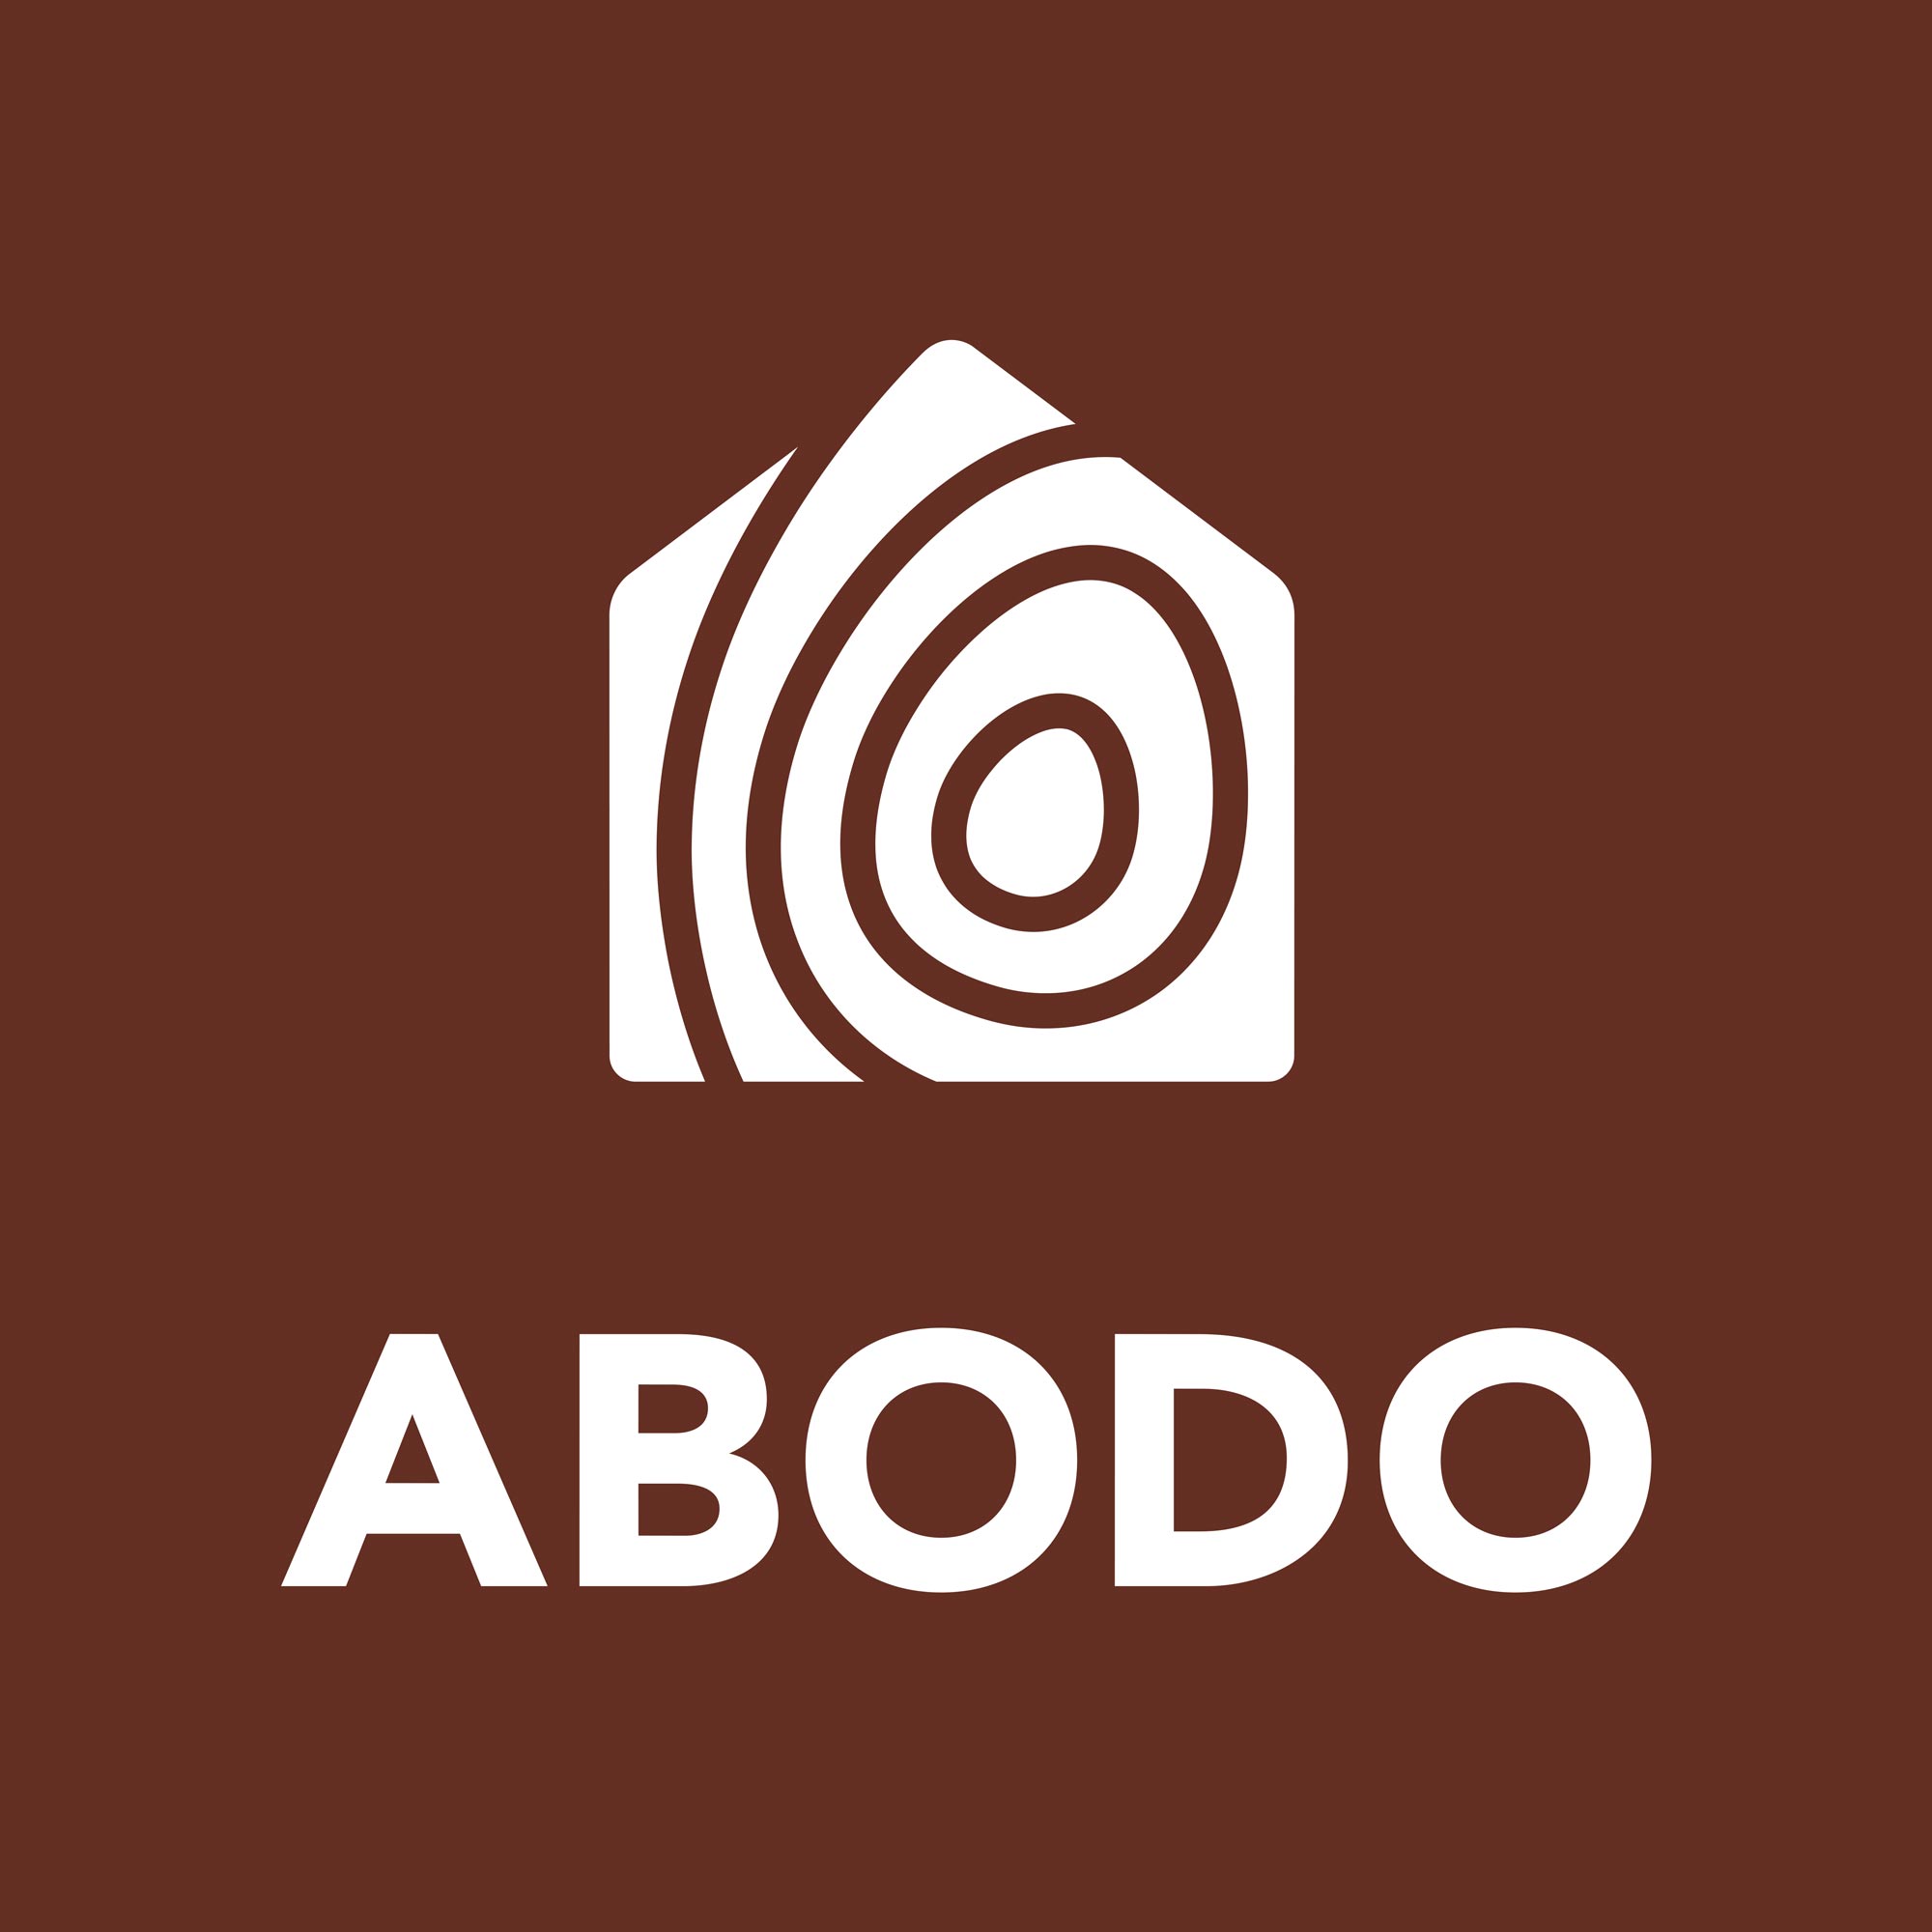 Abodo Wood